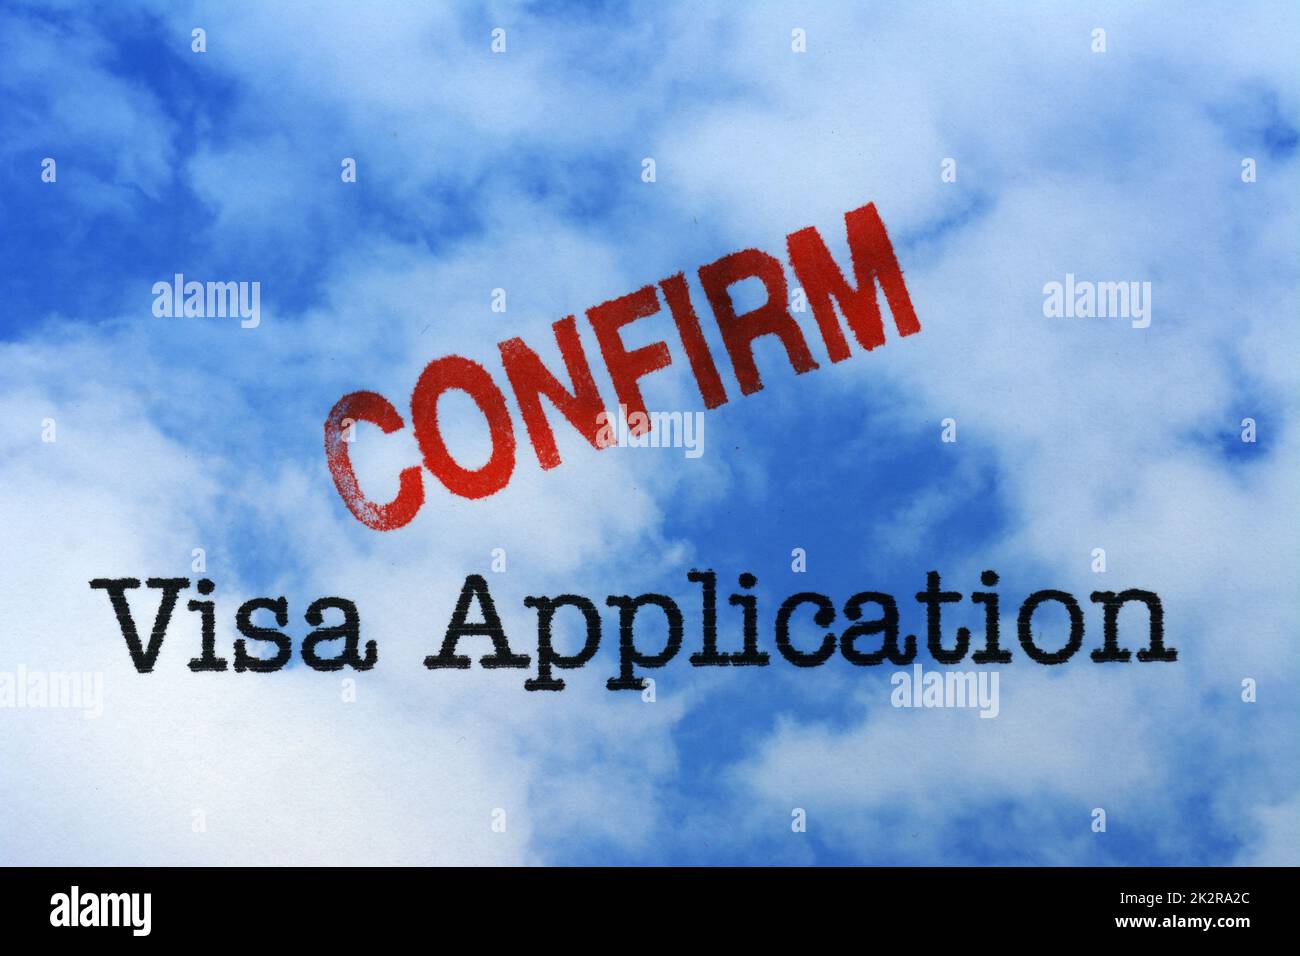 Visa application - confirm Stock Photo